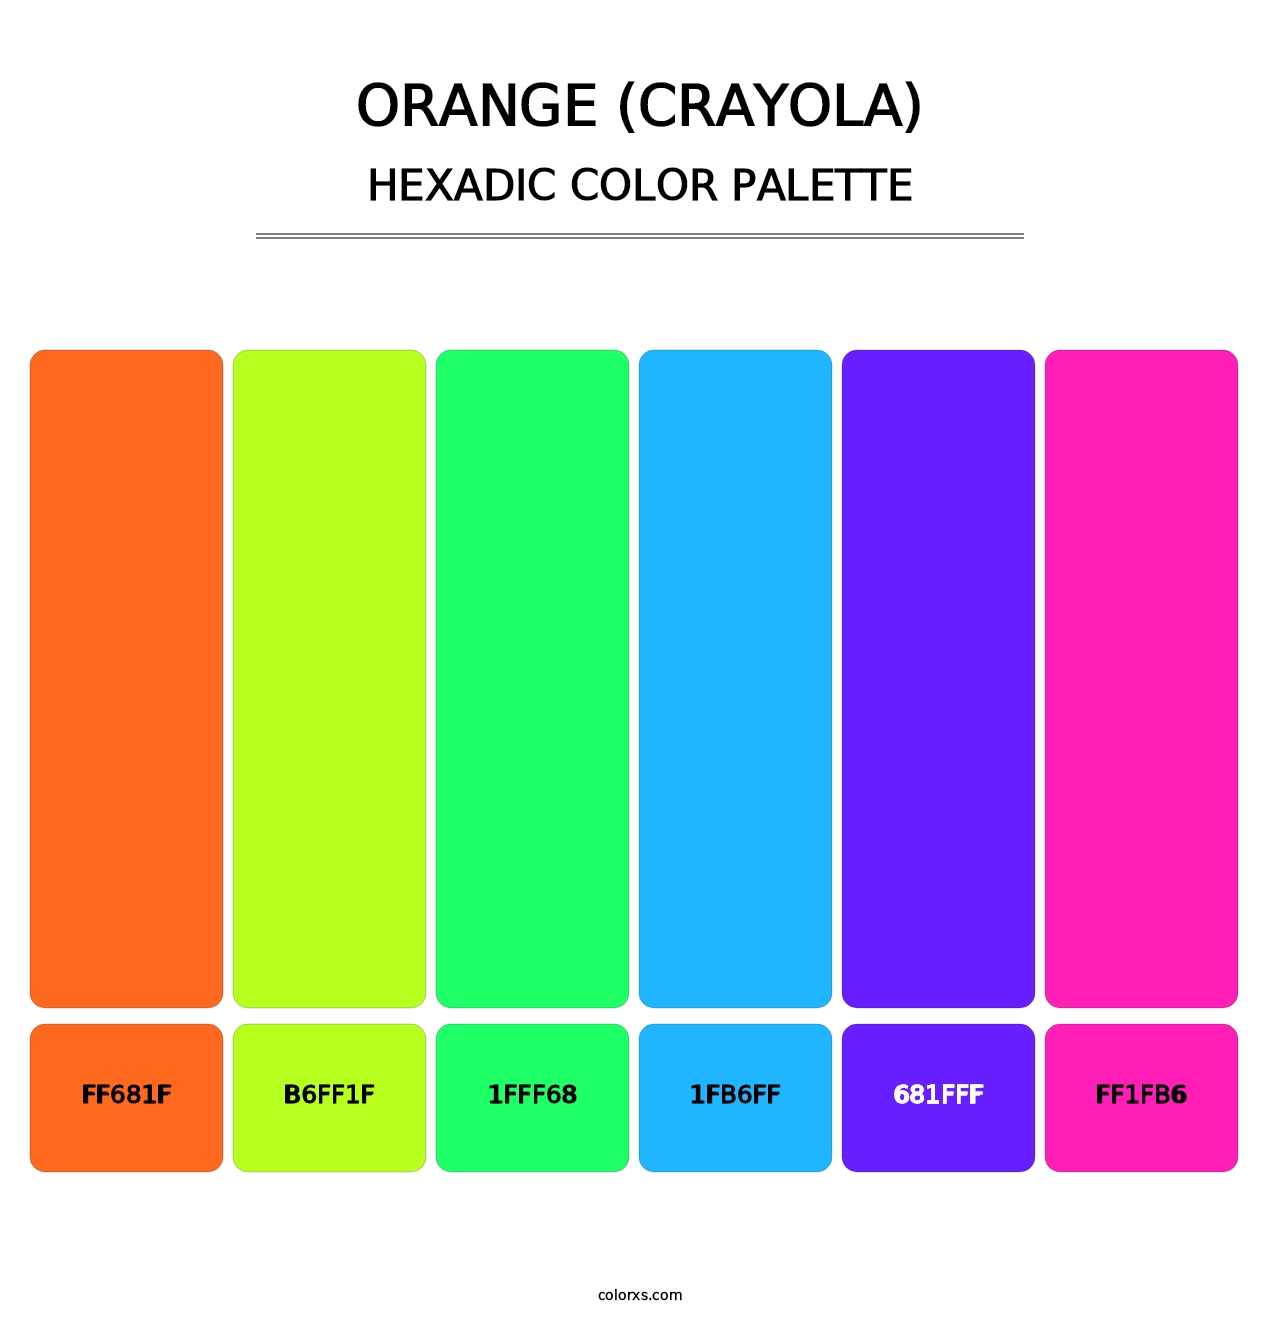 Orange (Crayola) - Hexadic Color Palette